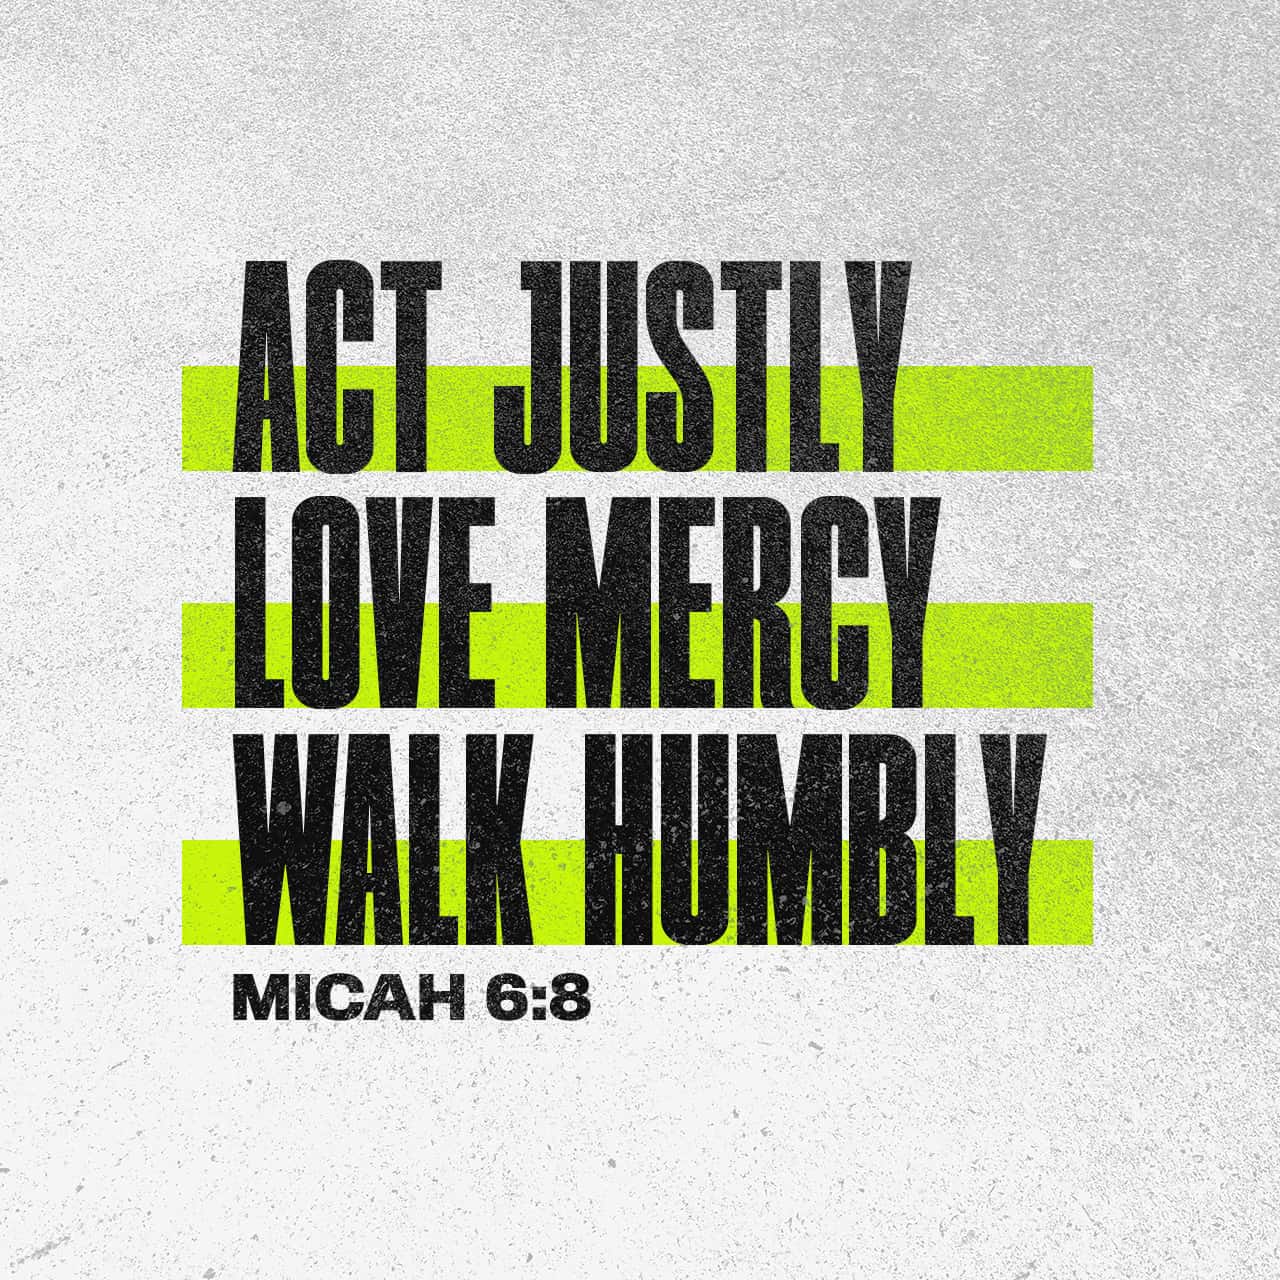 Act Justly. Love Mercy, Walk Humbly. - Micah 6:8 - Verse Image